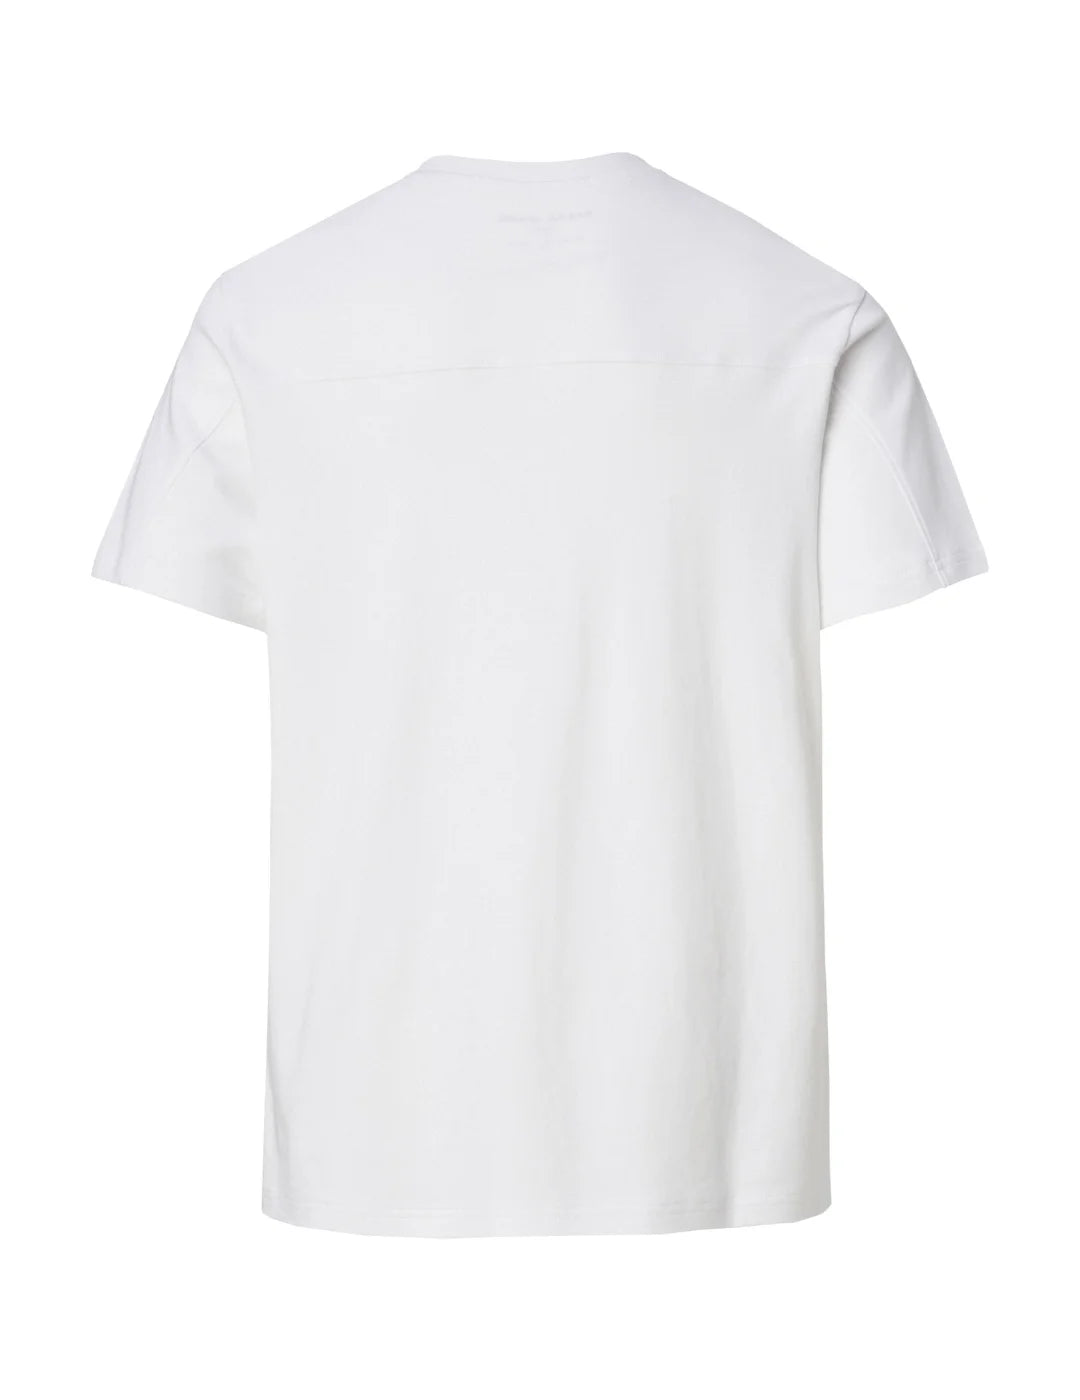 Camiseta Lisa Branding Salsa Blanco | Bicos de Fío